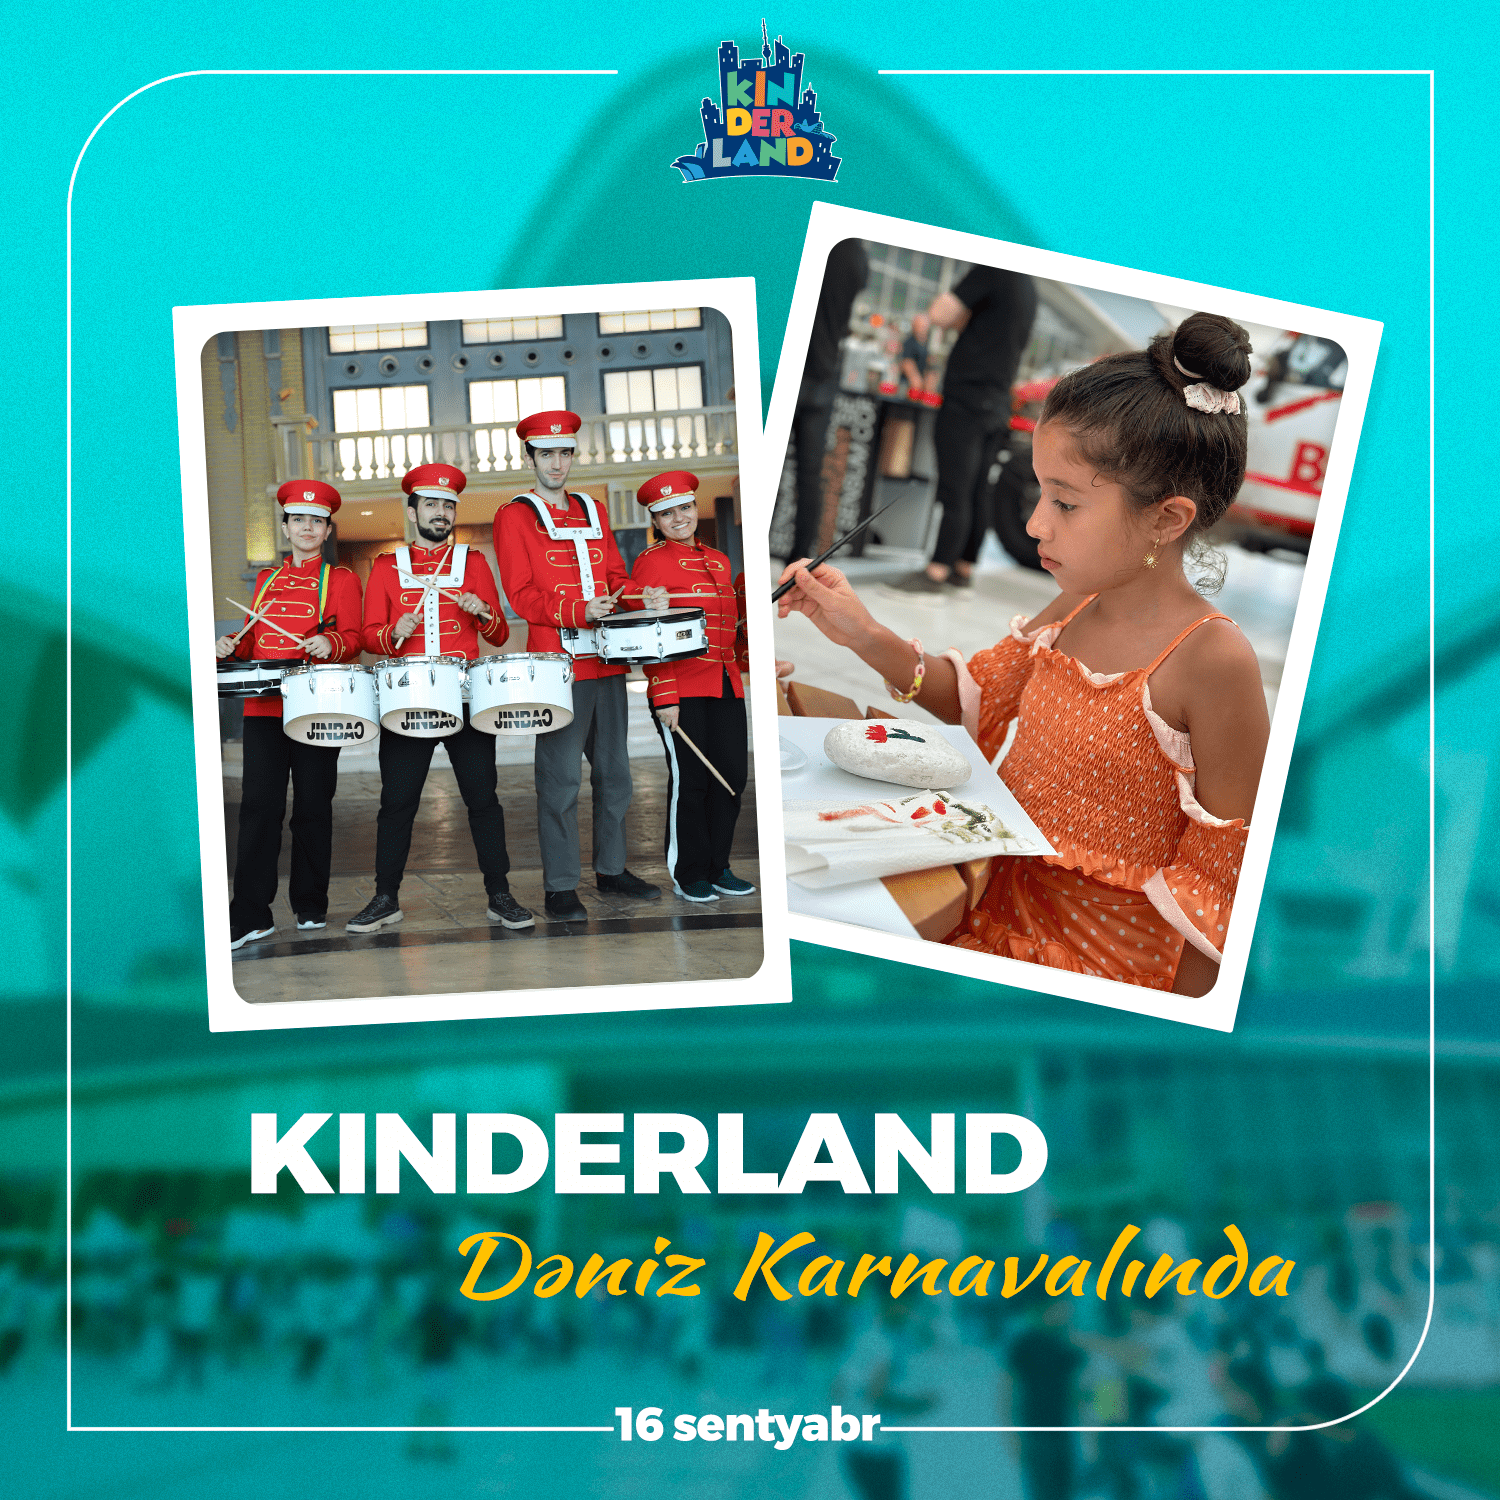 Kinderland at the carnival "Deniz"!